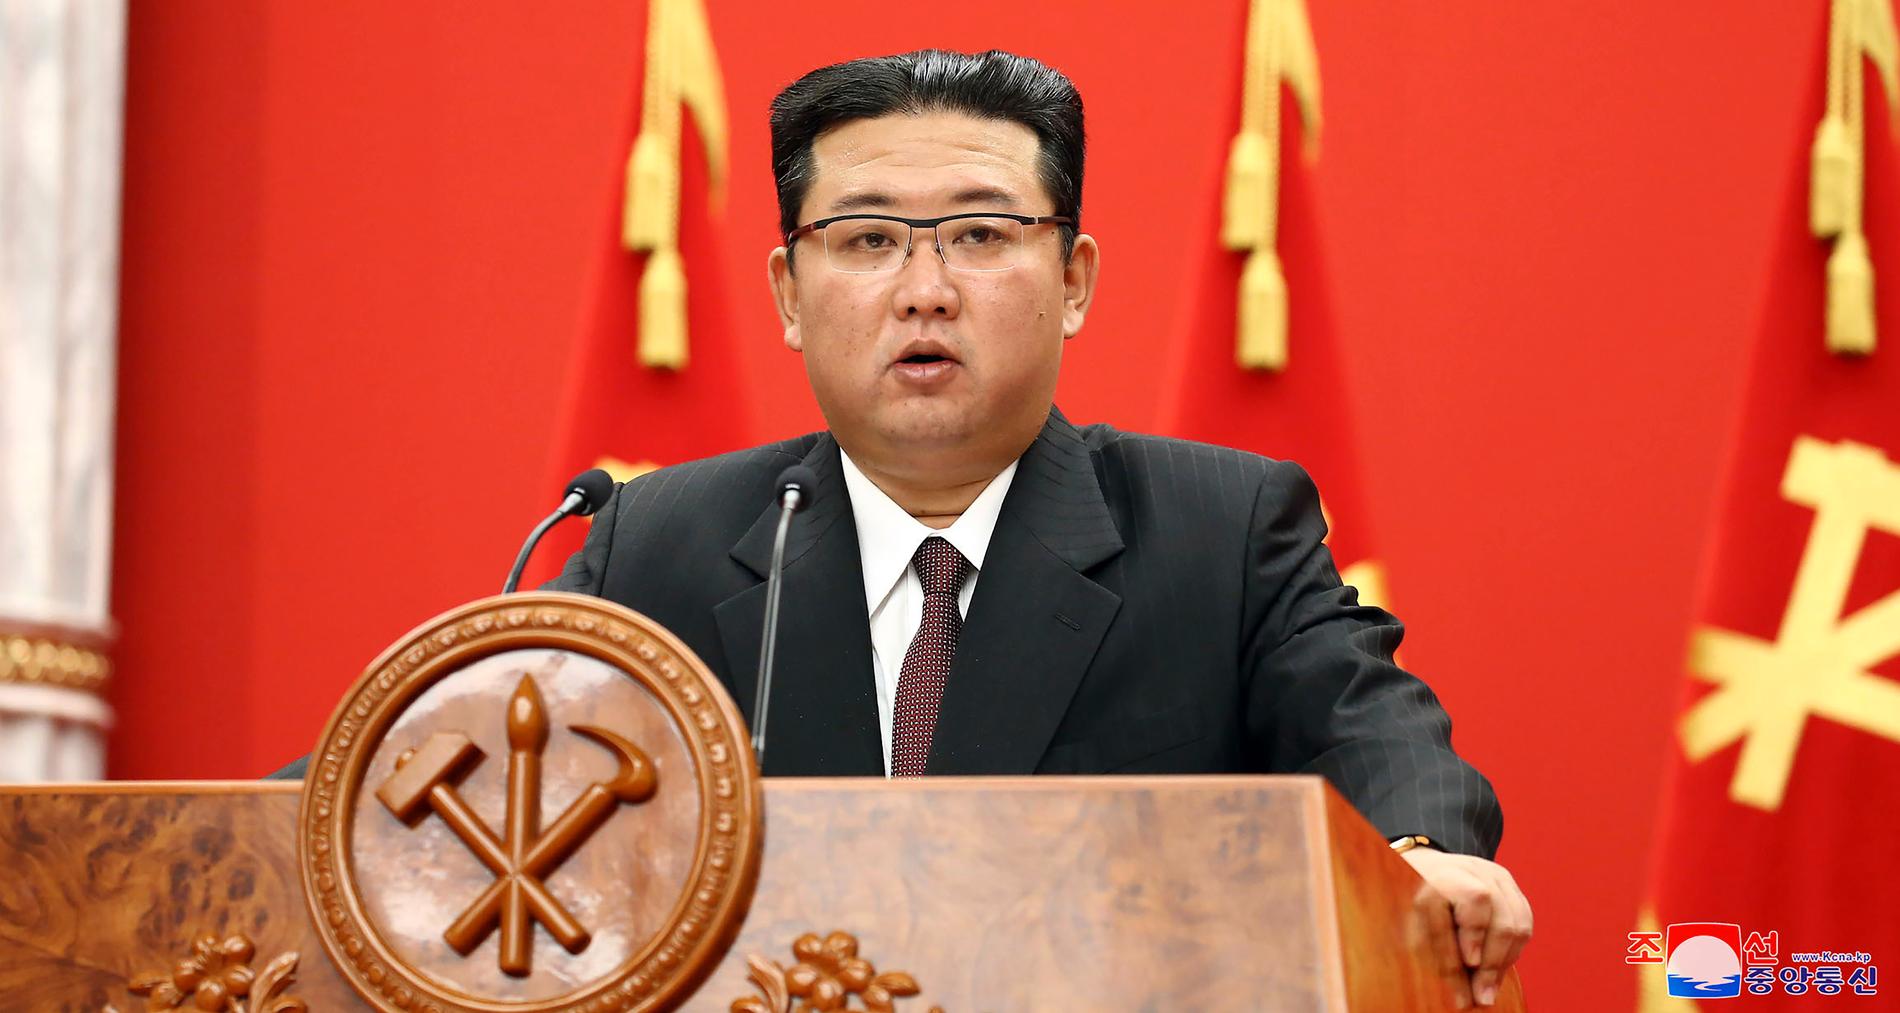 Nordkoreas diktator Kim Jong Un.